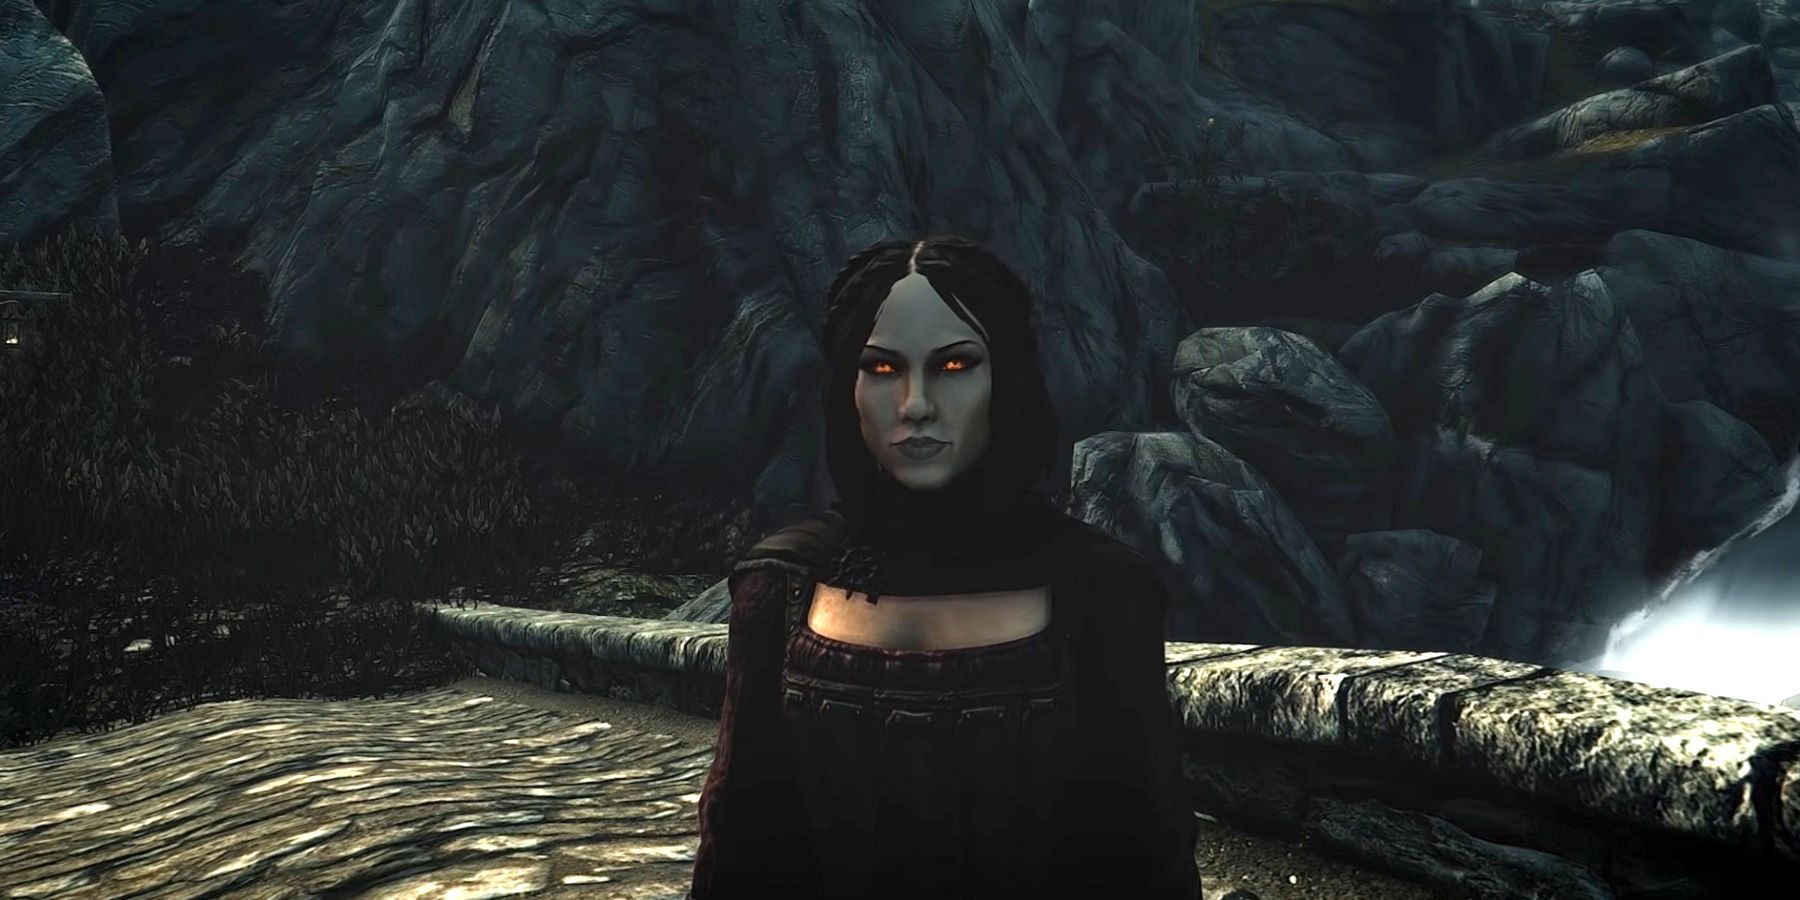 Image from Skyrim showing Serana stood on a stone bridge.